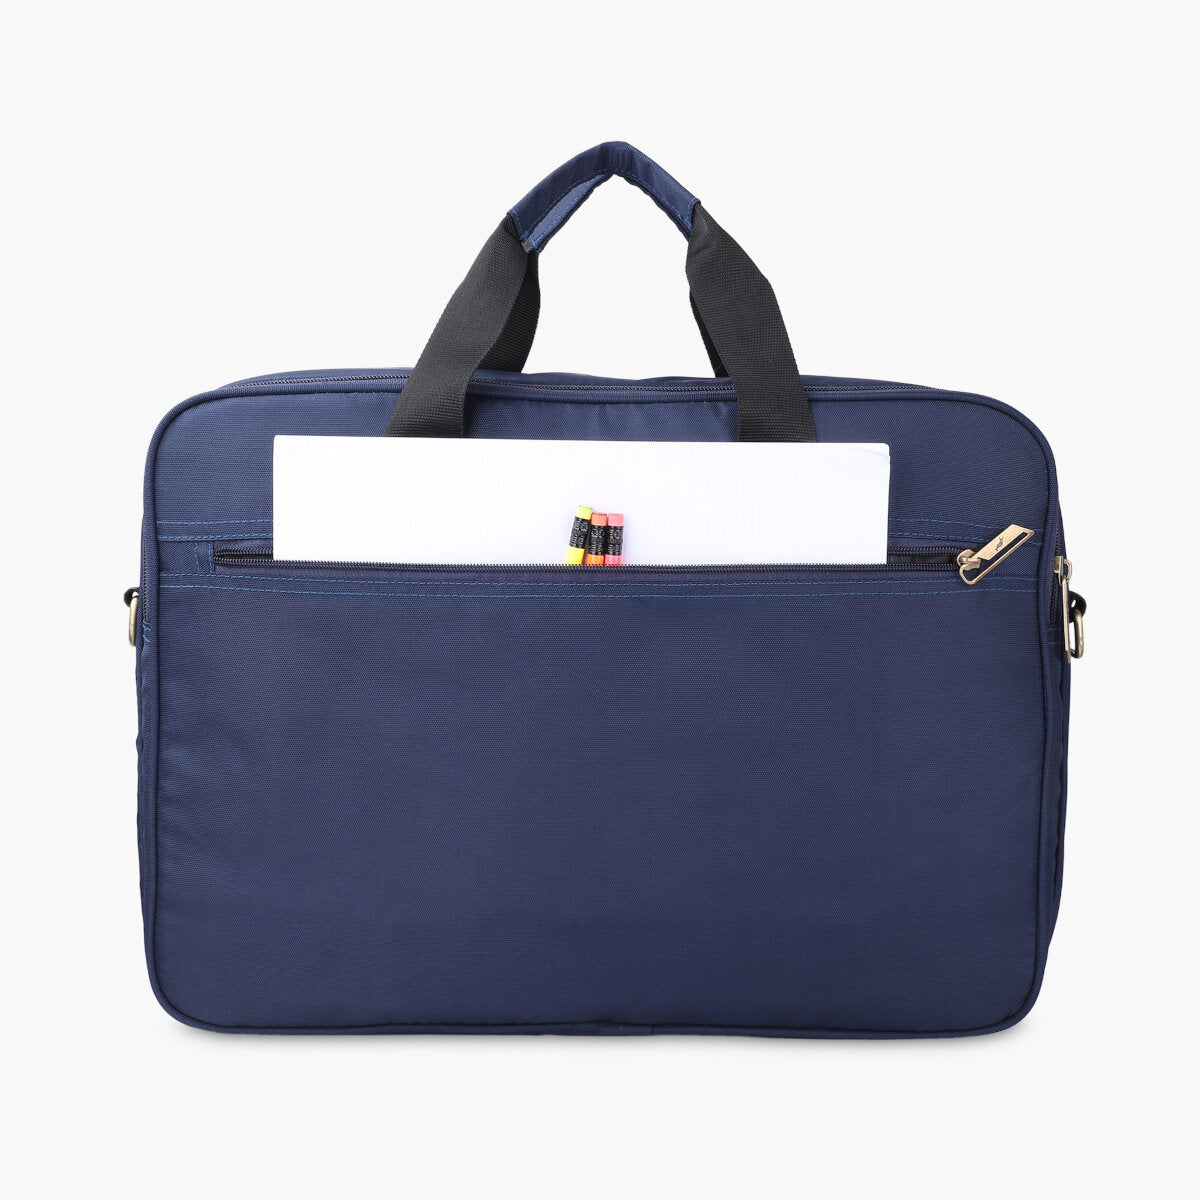 Navy-Blue, Headquarter Travel & Office Bag-4